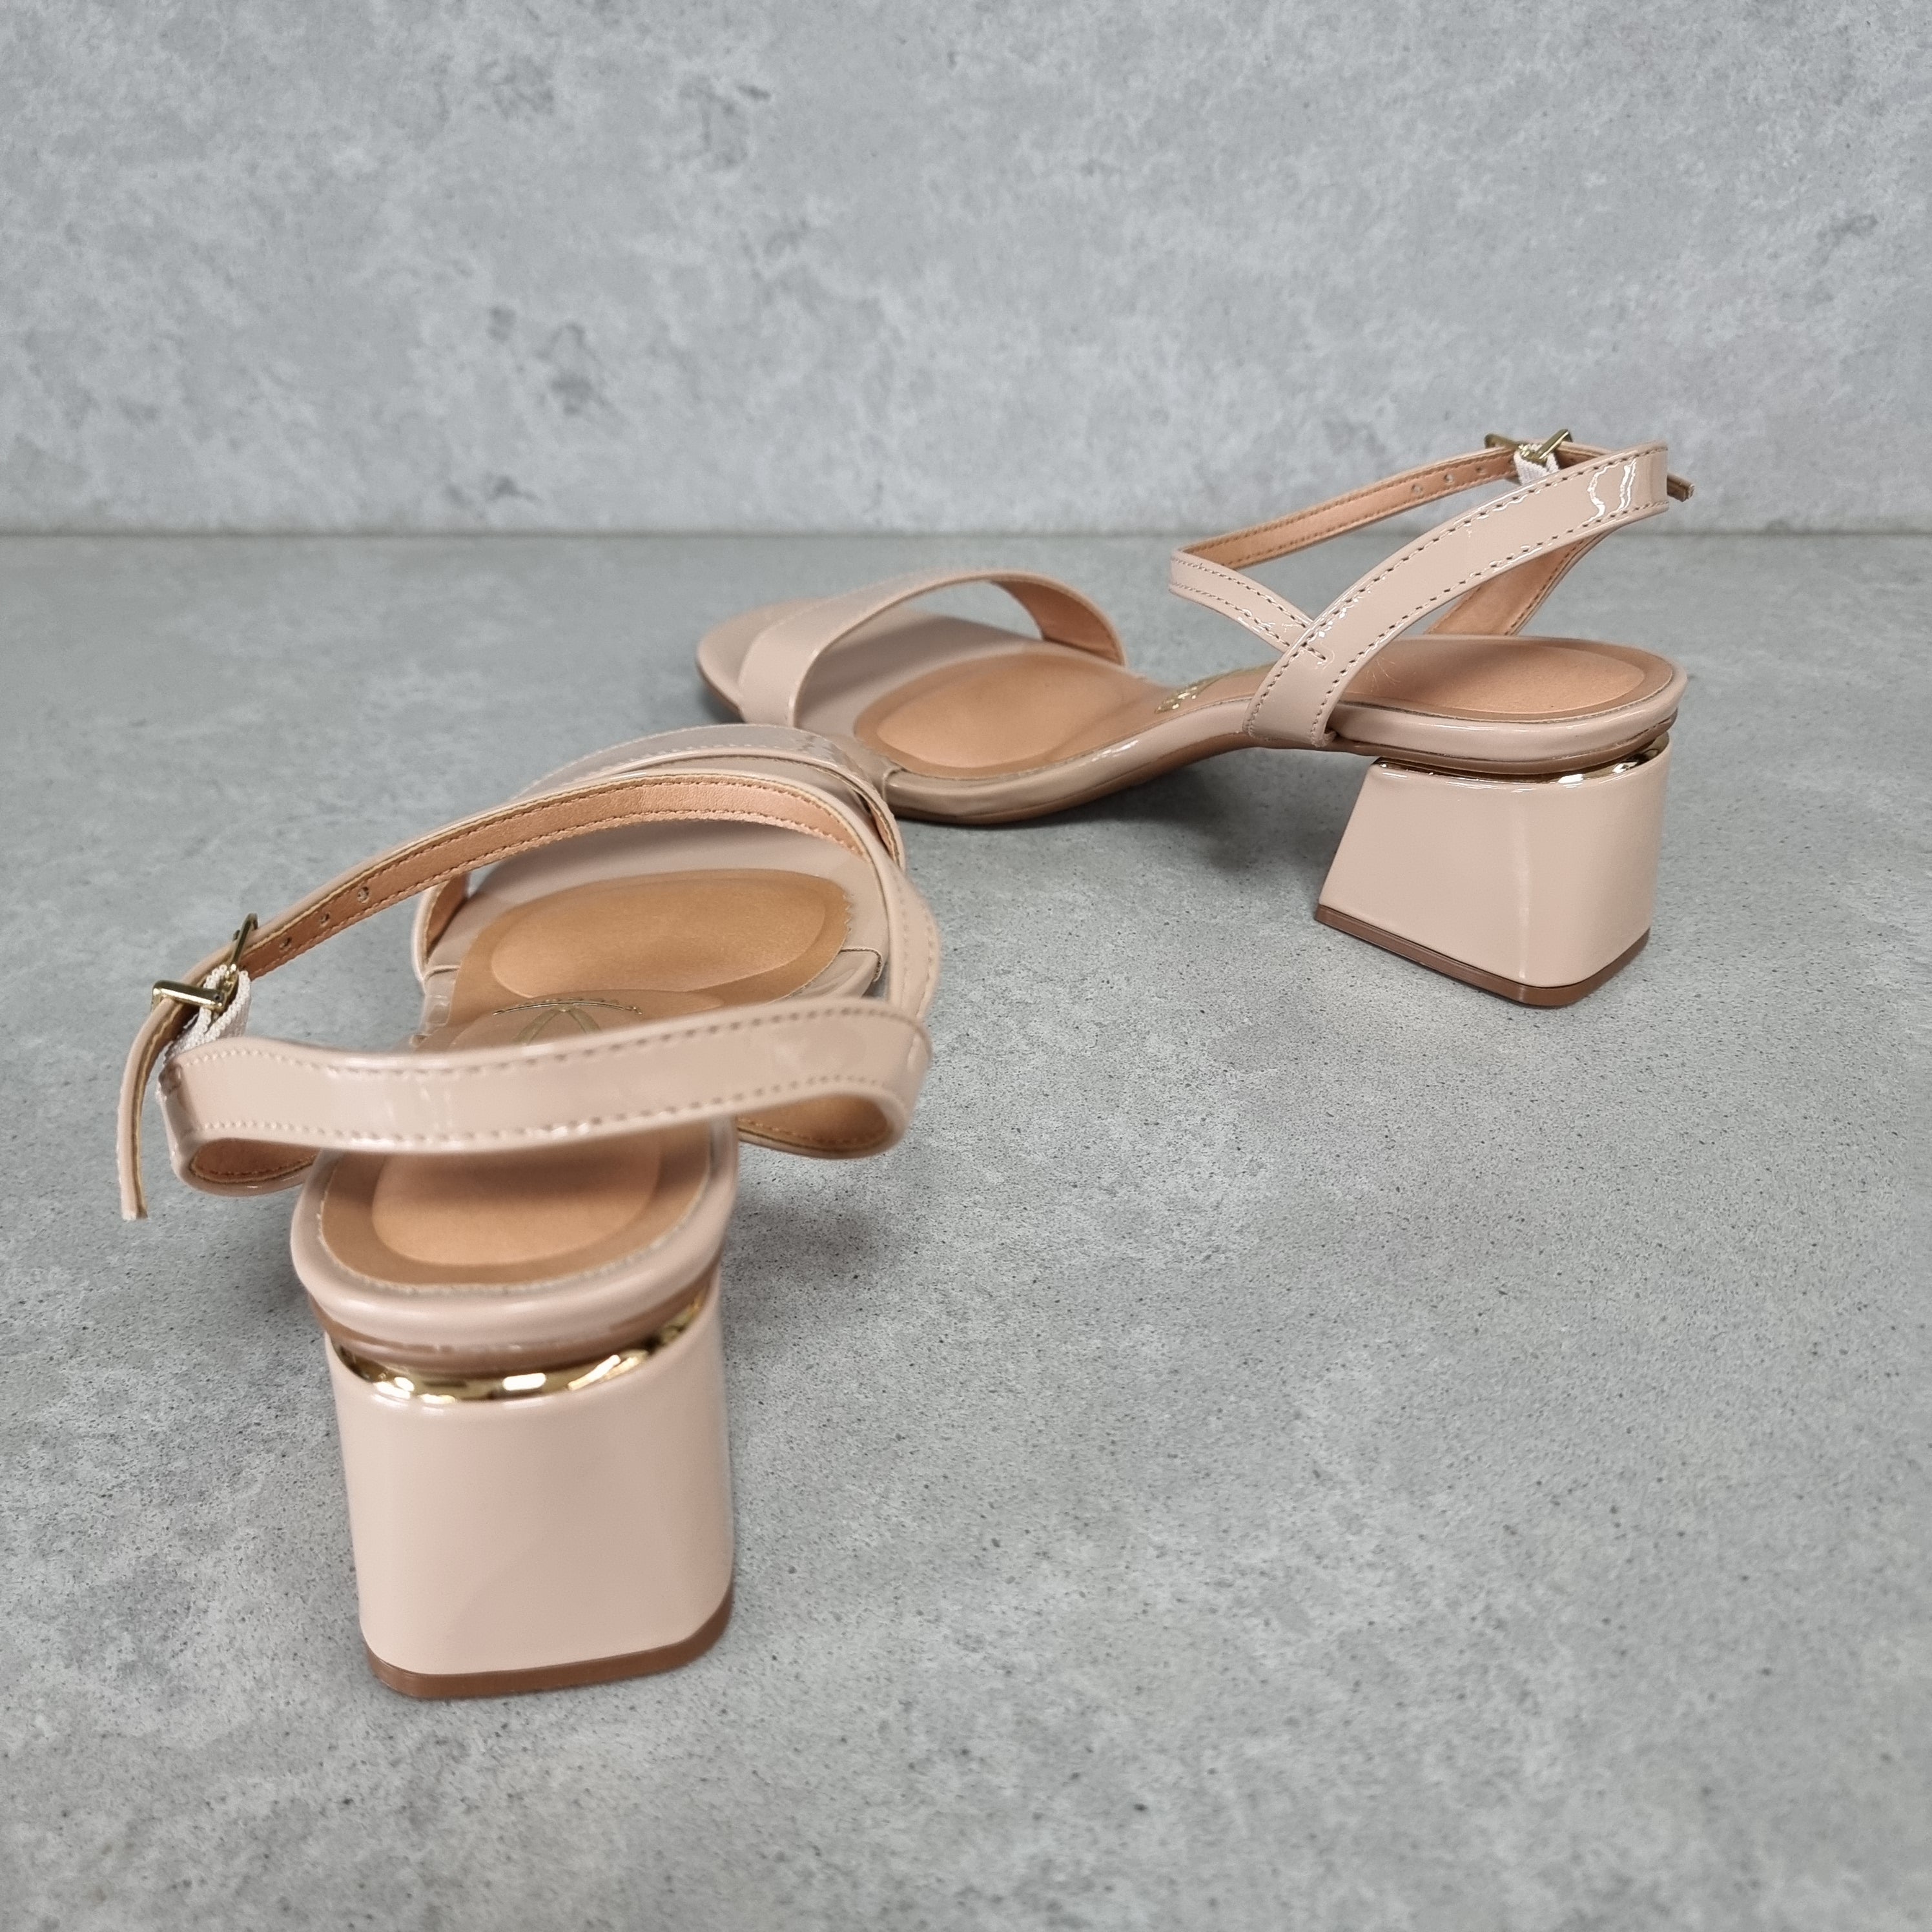 Vizzano 6428-101 Low Heel Sandal in Beige Patent